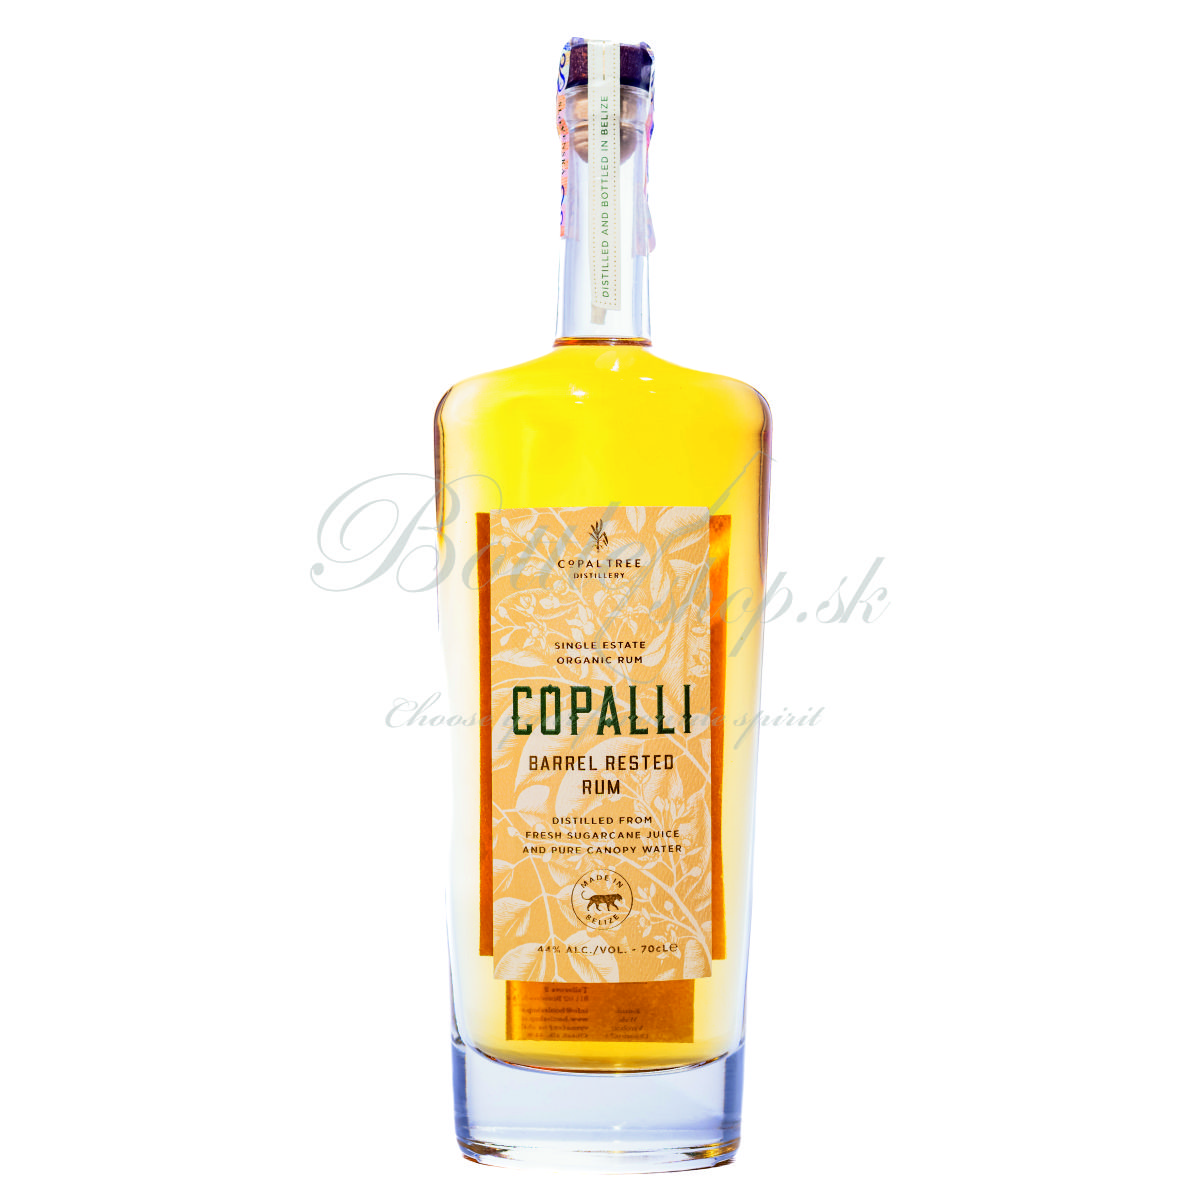 copalli barrel rested rum 0,7l